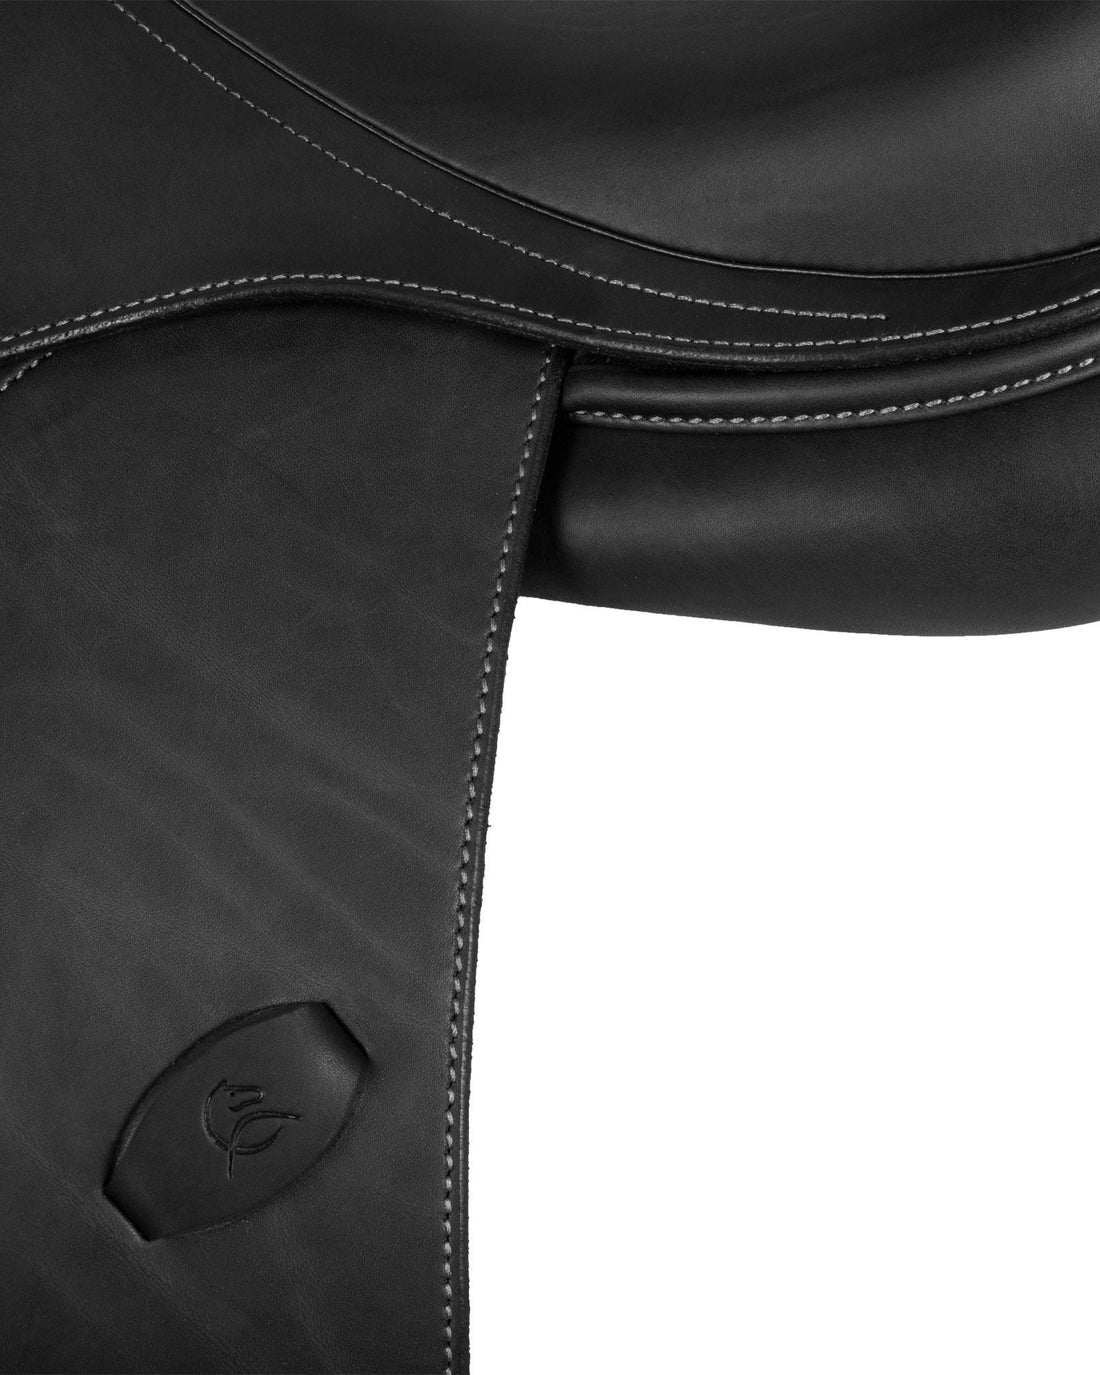 Acavallo Bernini all purpose saddle latex panels AC 9153 - HorseworldEU